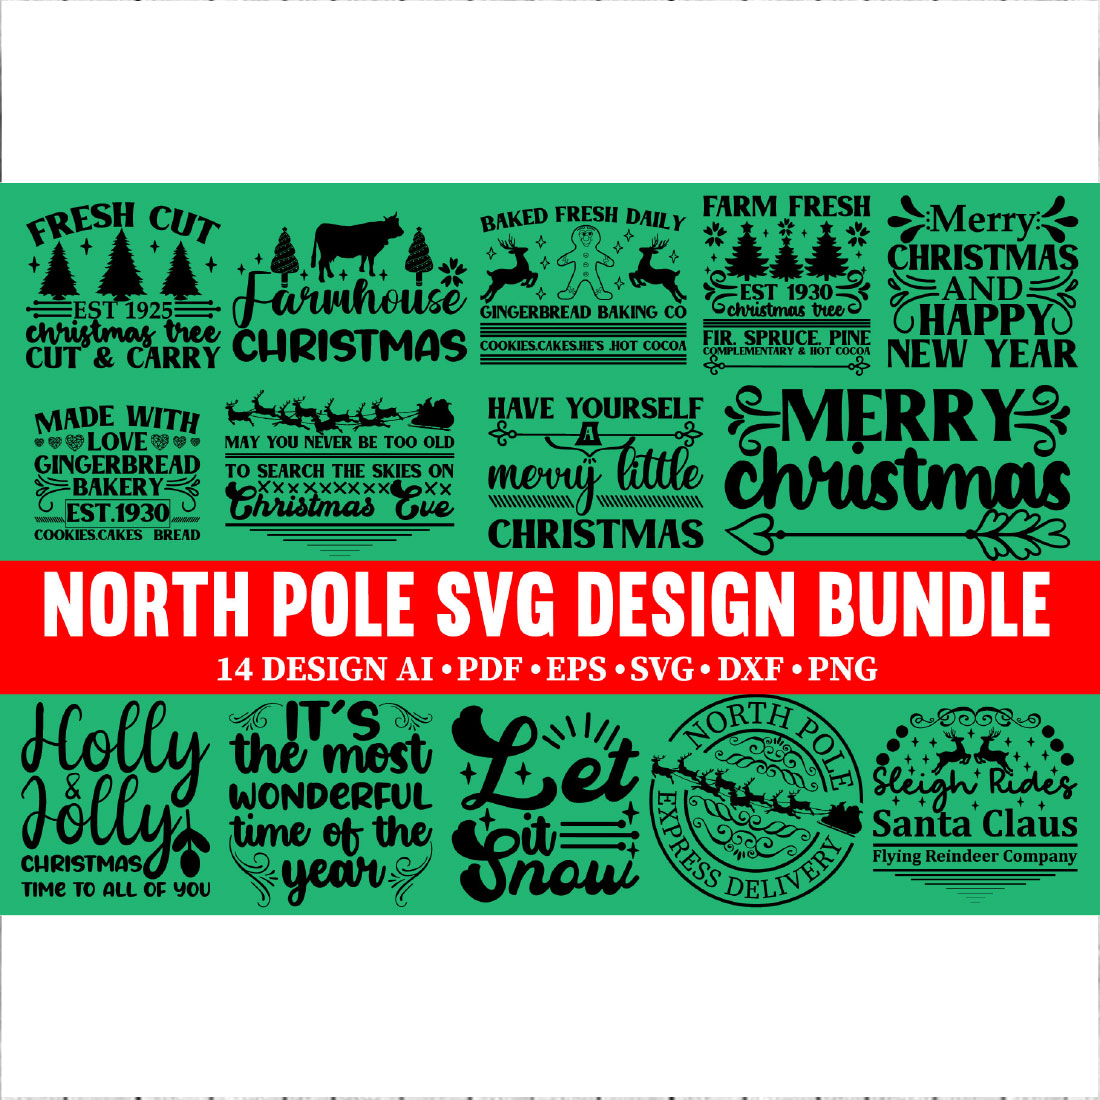 North Pole Bundle SVG Files Vol-03 cover image.